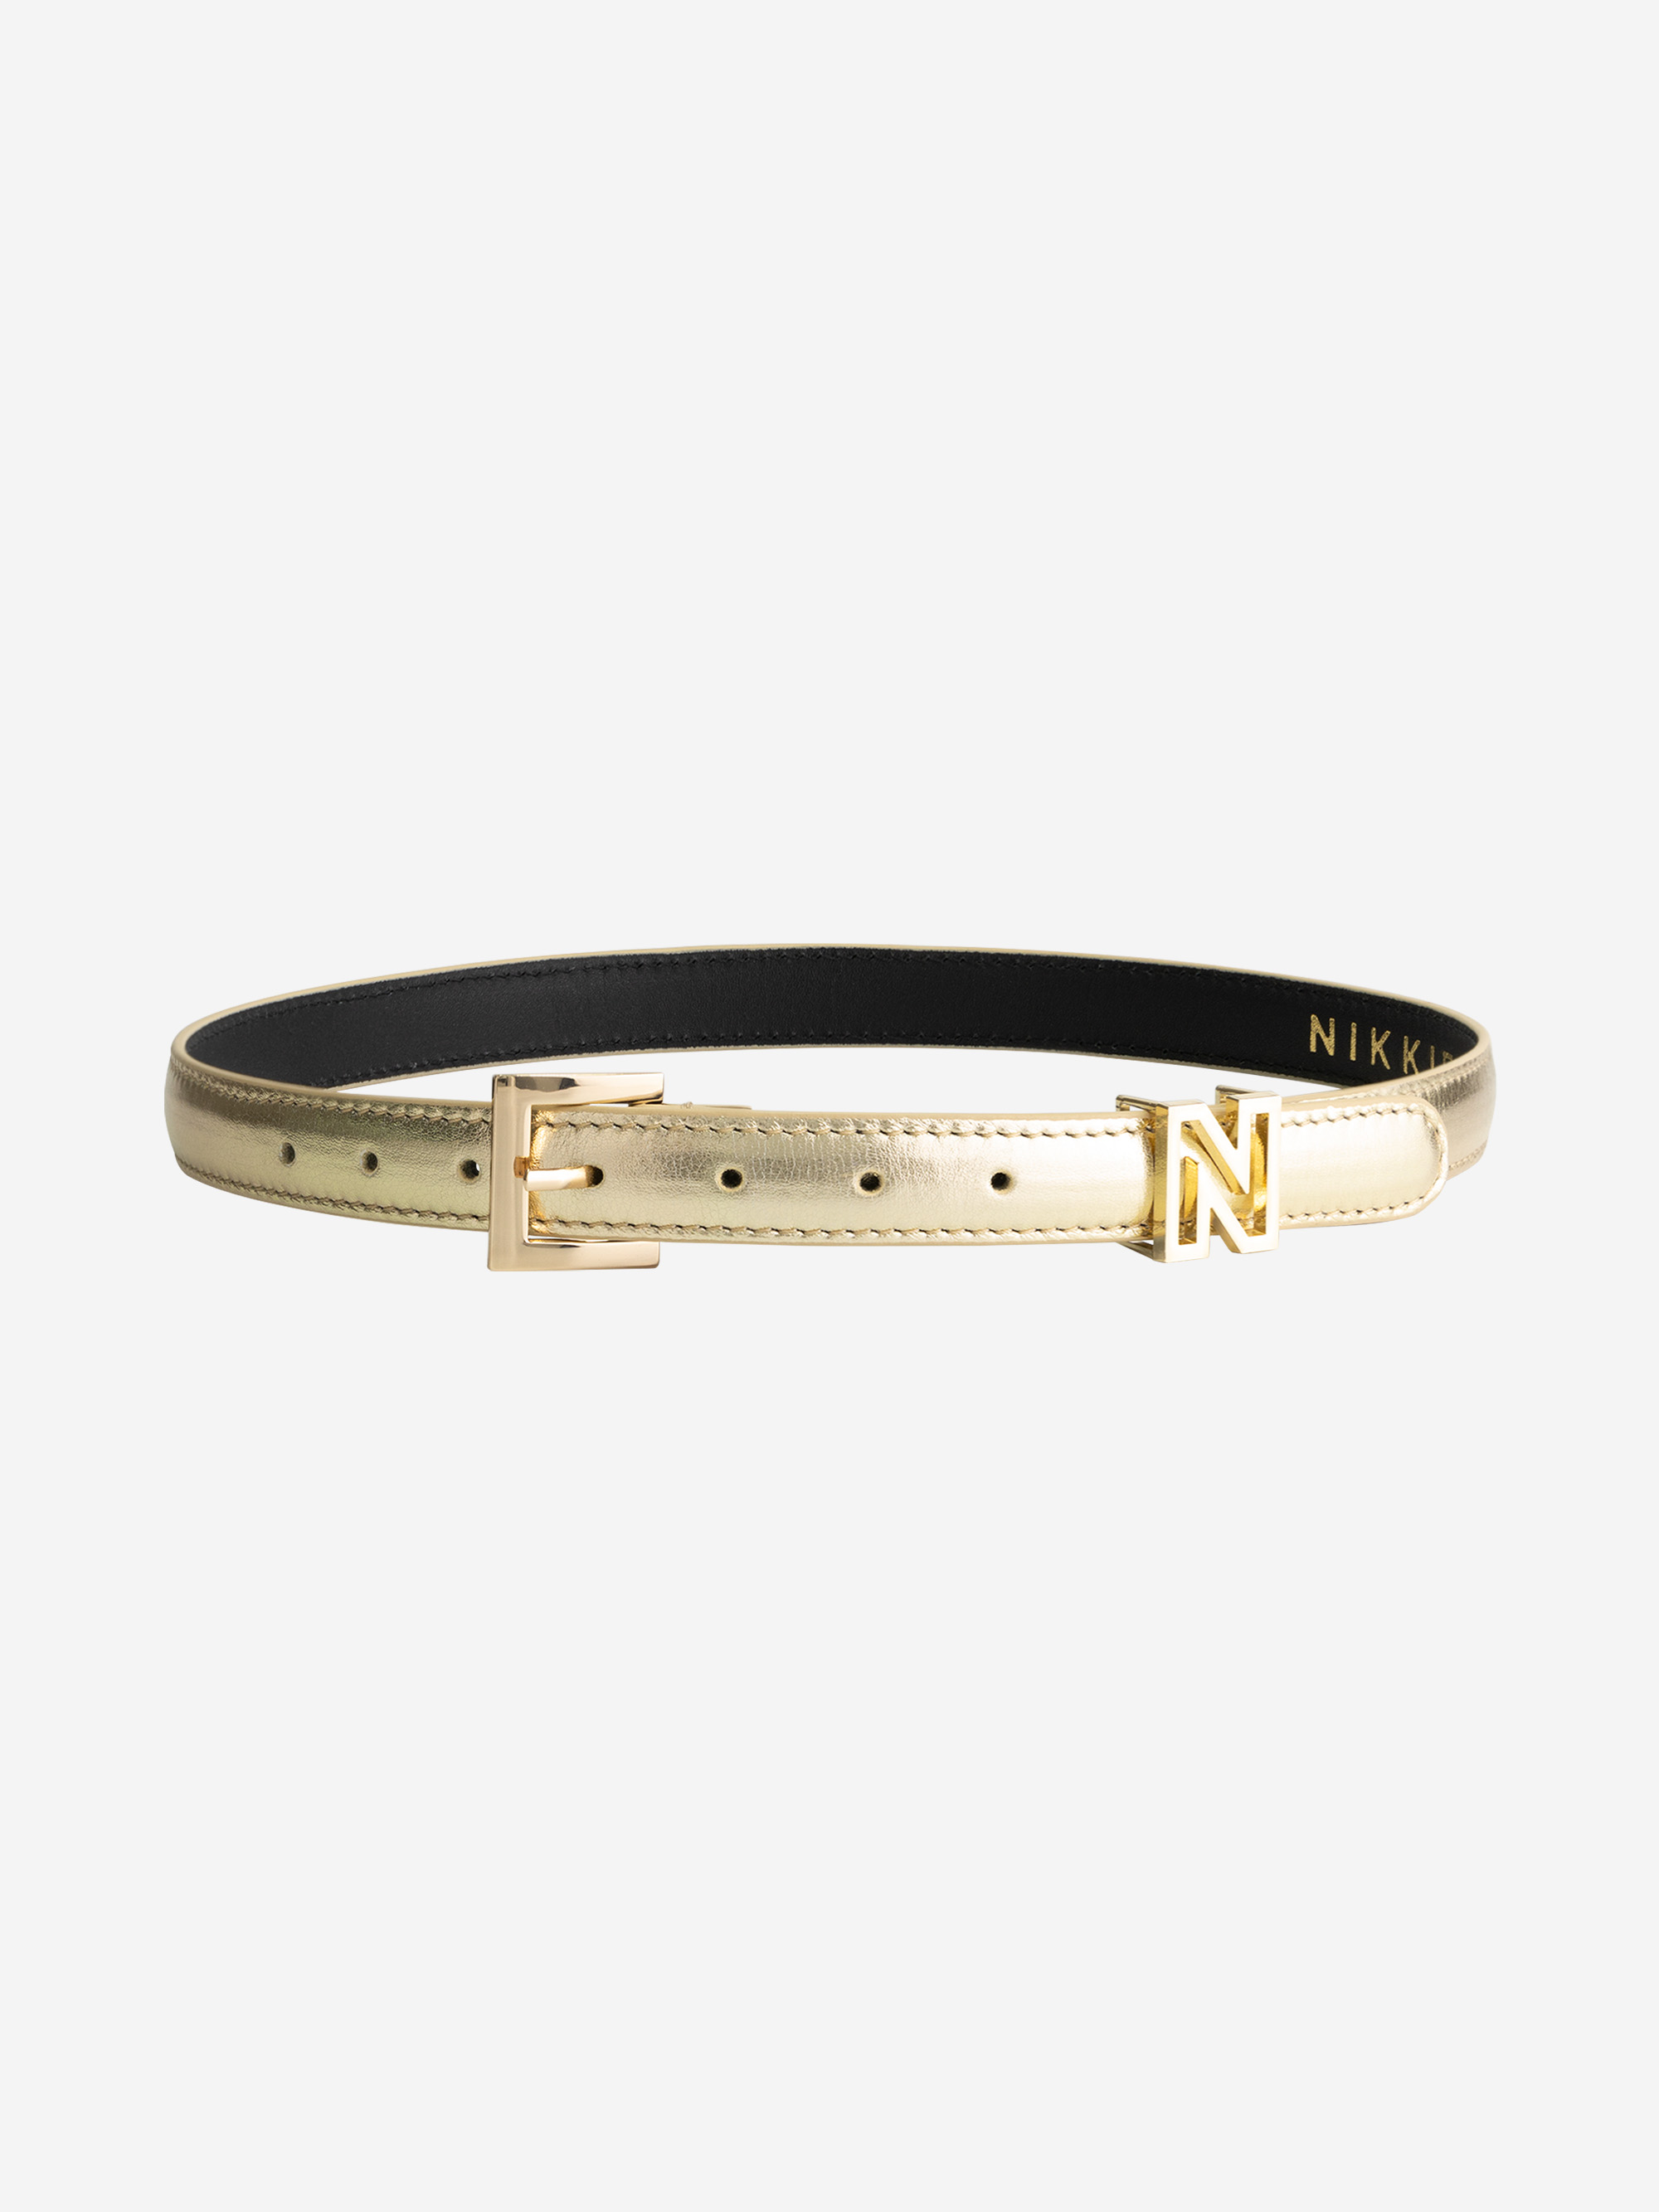 Waist belt with N-logo